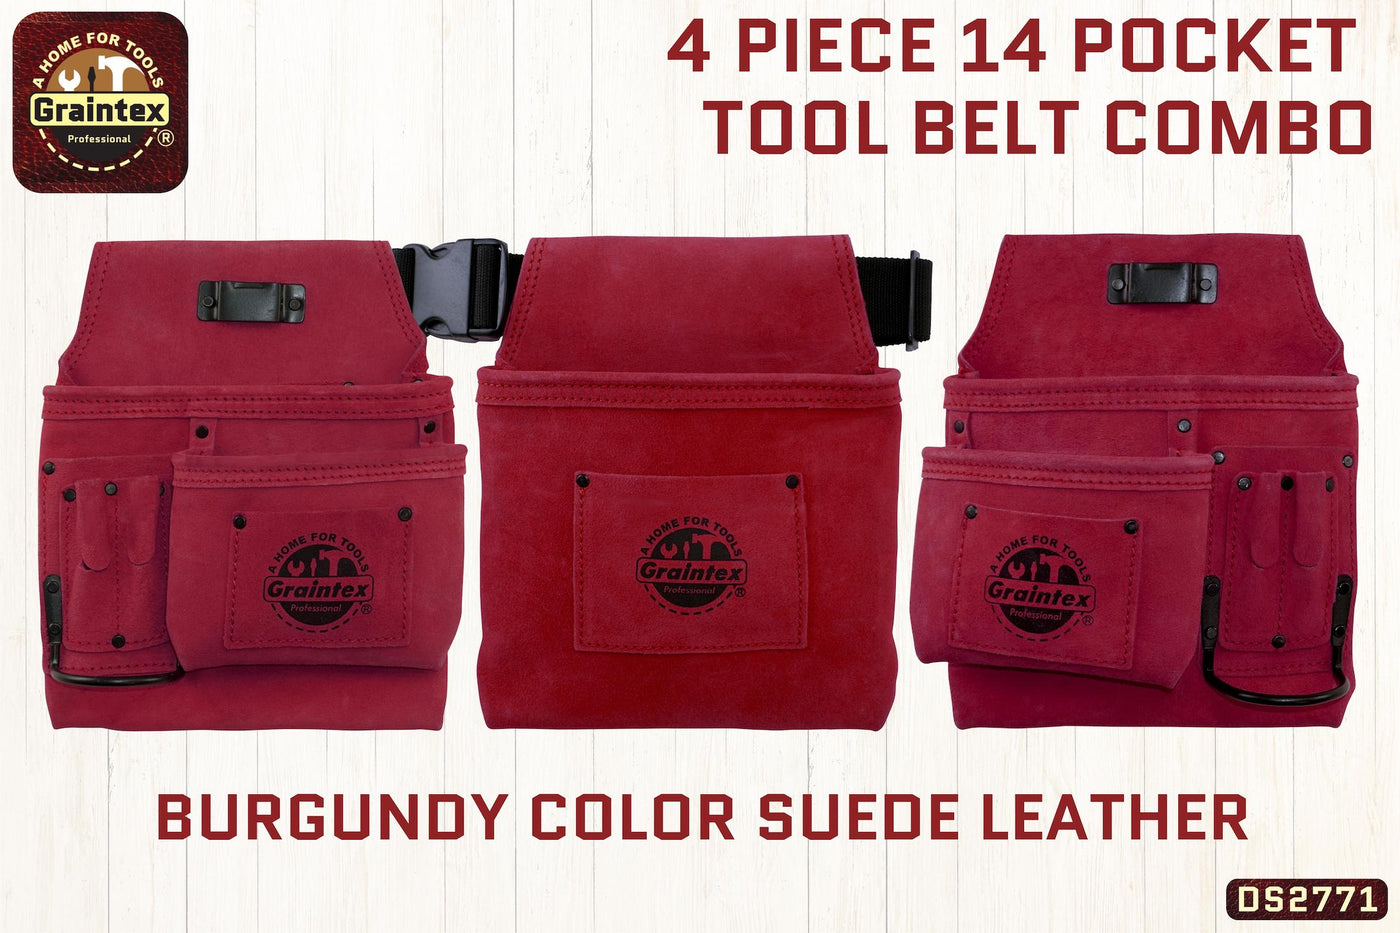 DS2771 :: 4 Piece 14 Pocket Tool Belt Combo Burgundy Color Suede Leather